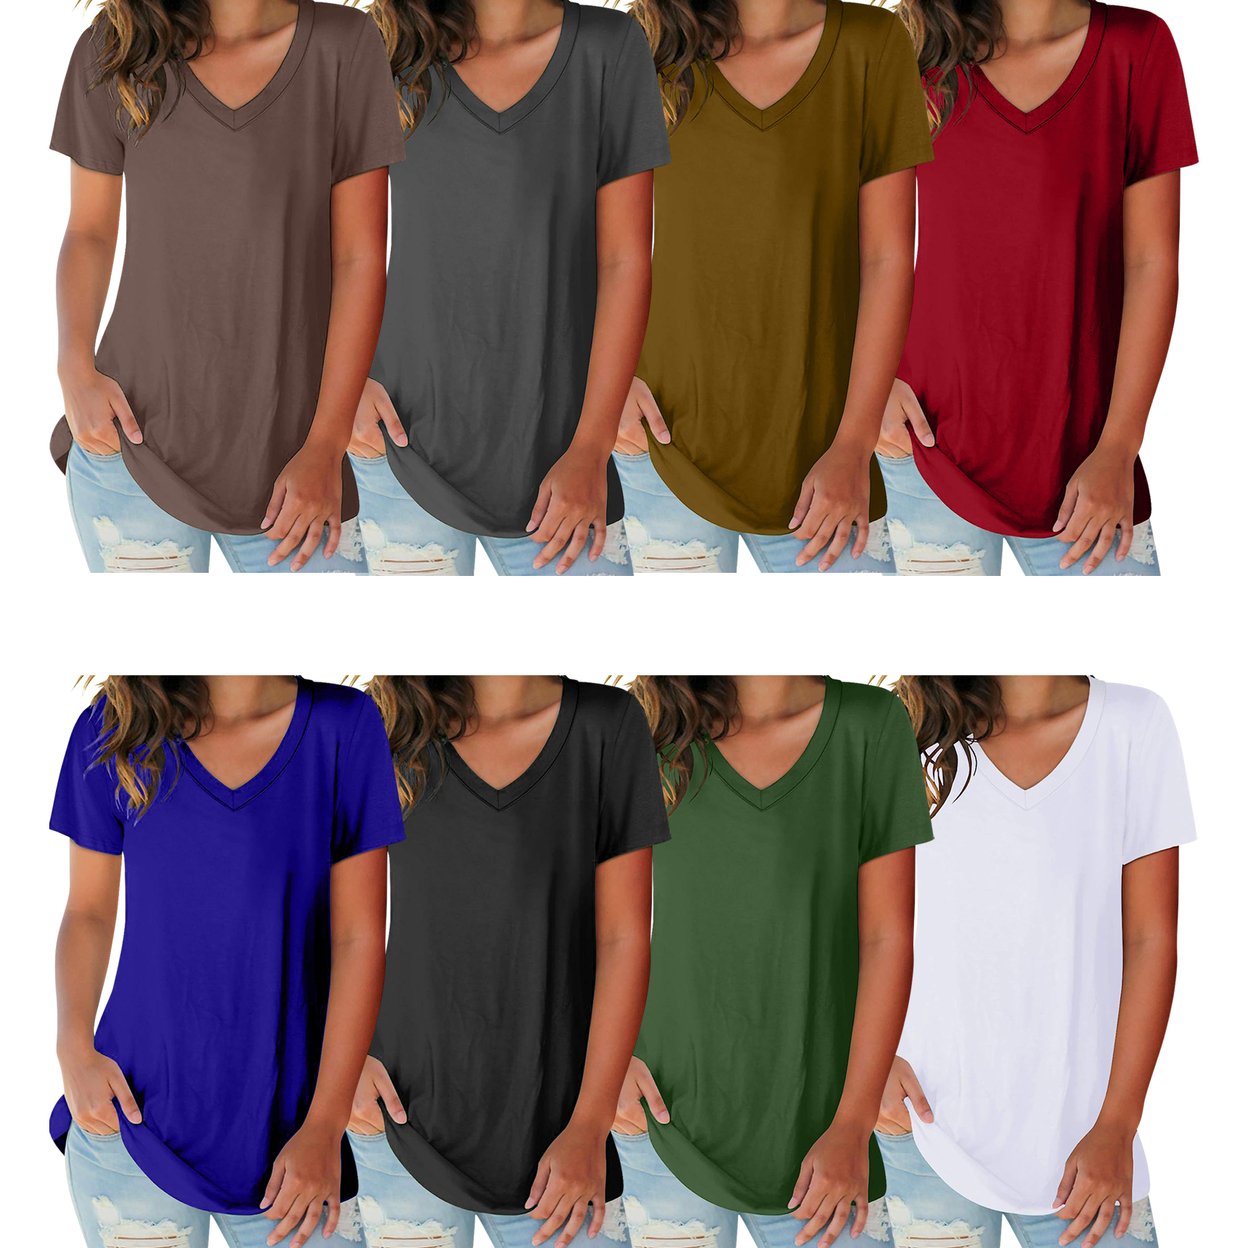 4-Pack: Women's Ultra Soft Smooth Cotton Blend Basic V-Neck Short Sleeve Shirts - X-large